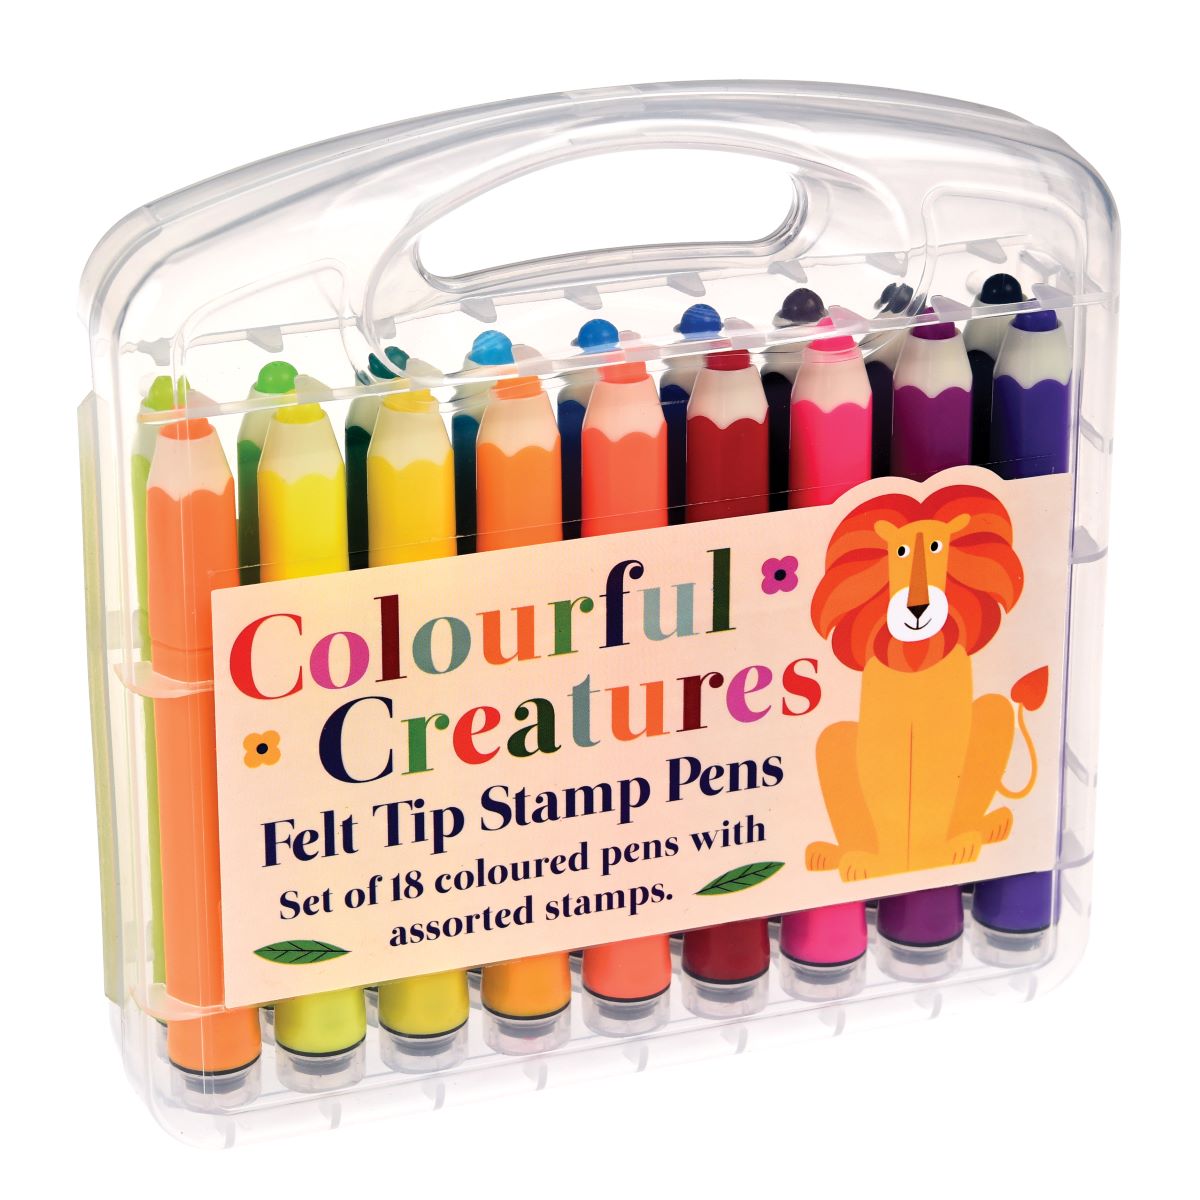 Felt tip stamp pens (set of 18) - Colourful Creatures